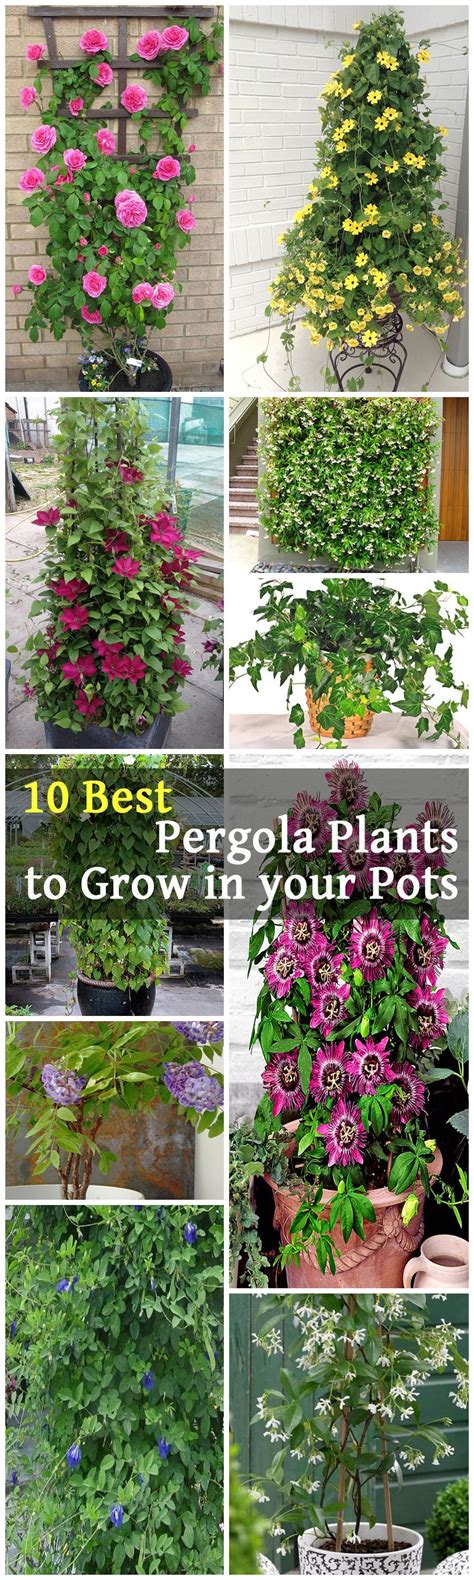 Top 10 Pergola Plants To Grow In Your Pots Pergola Plants Plants